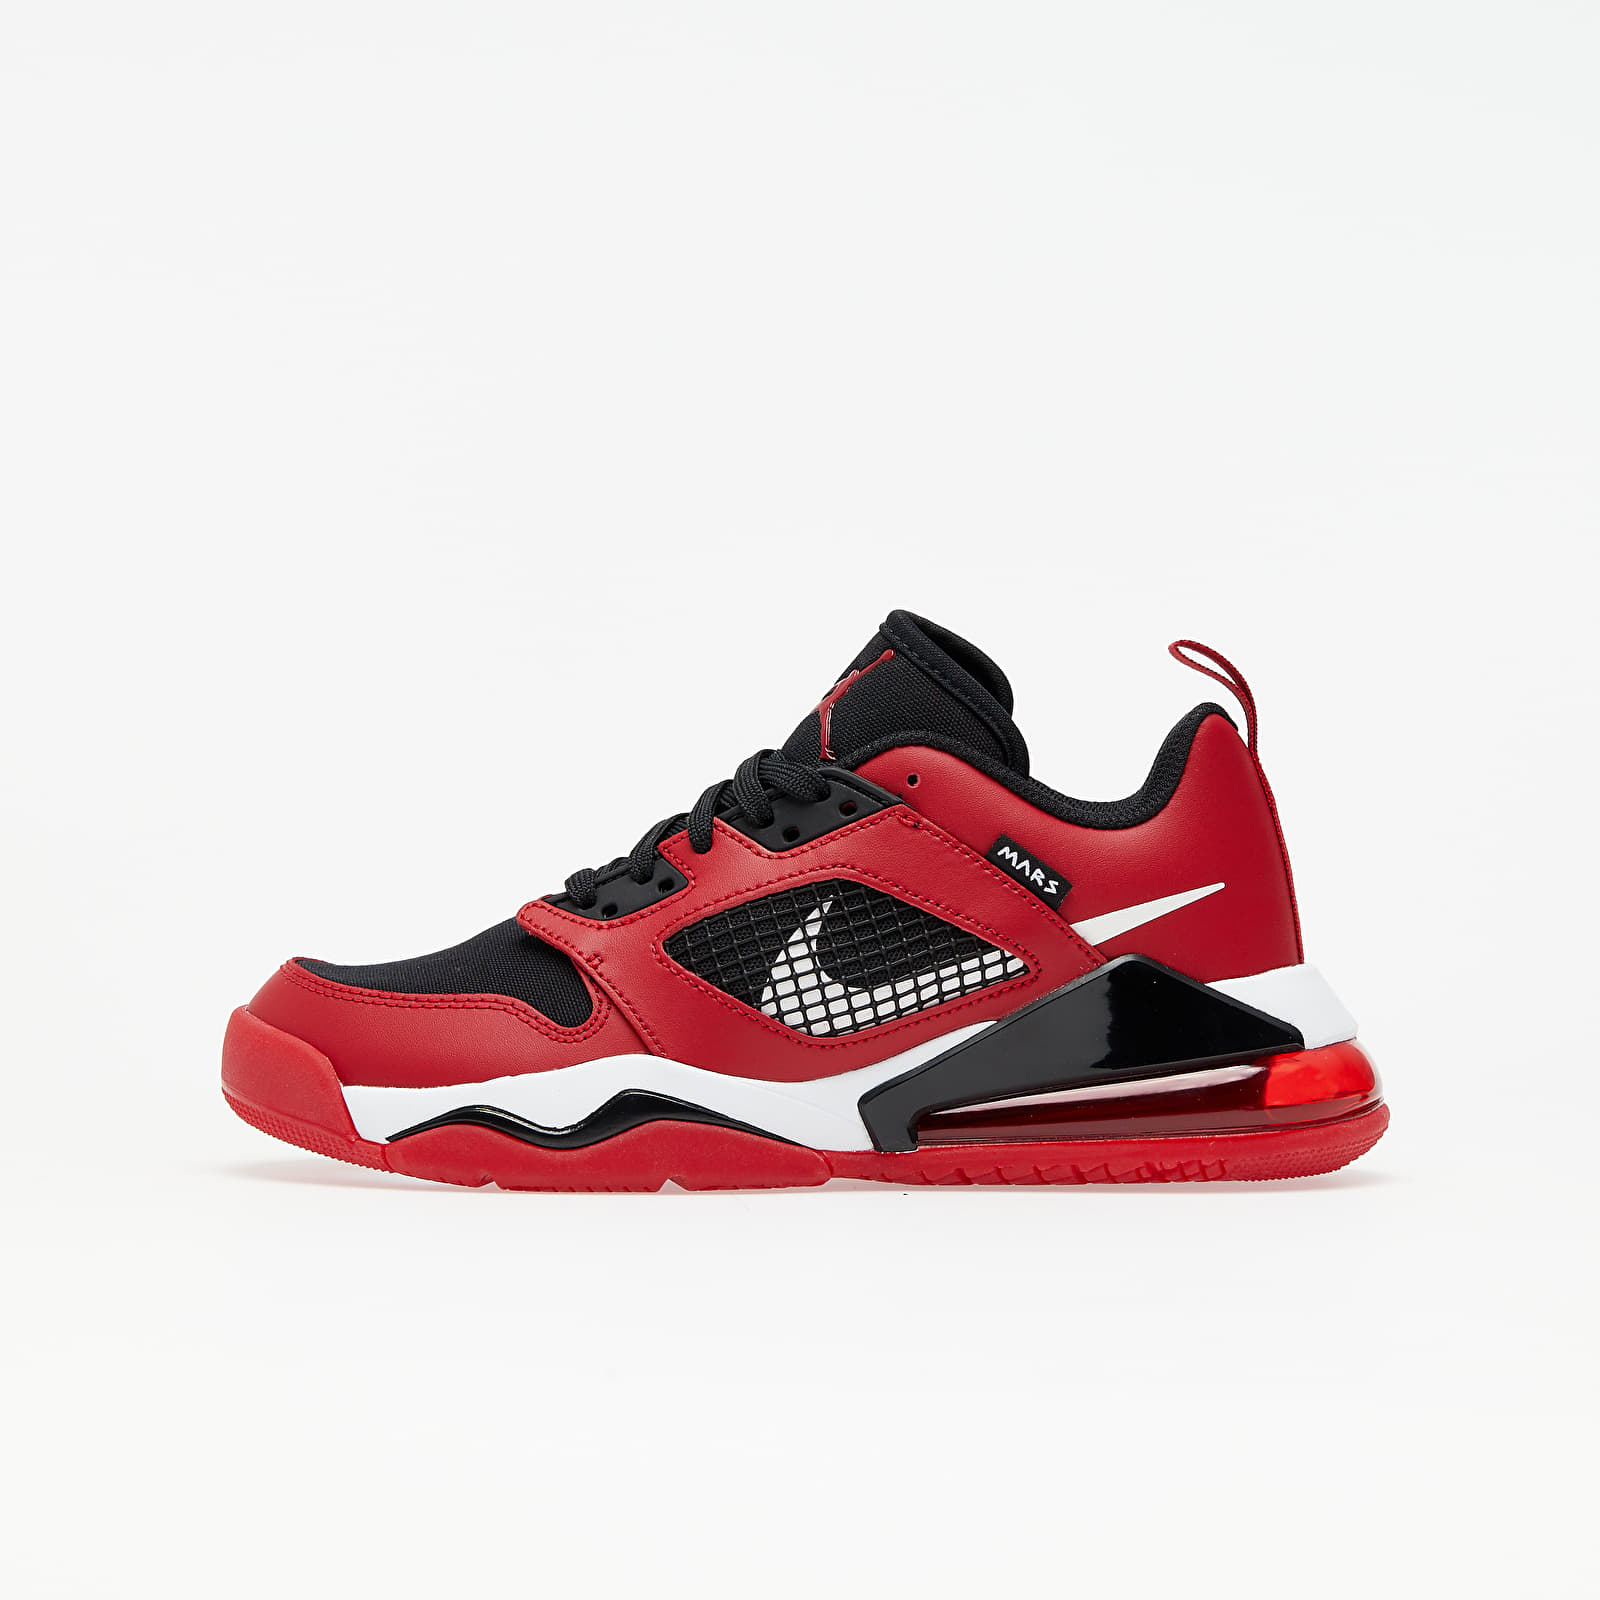 Chaussures et baskets enfants Jordan Mars 270 Low (GS) Gym Red/ White-Black